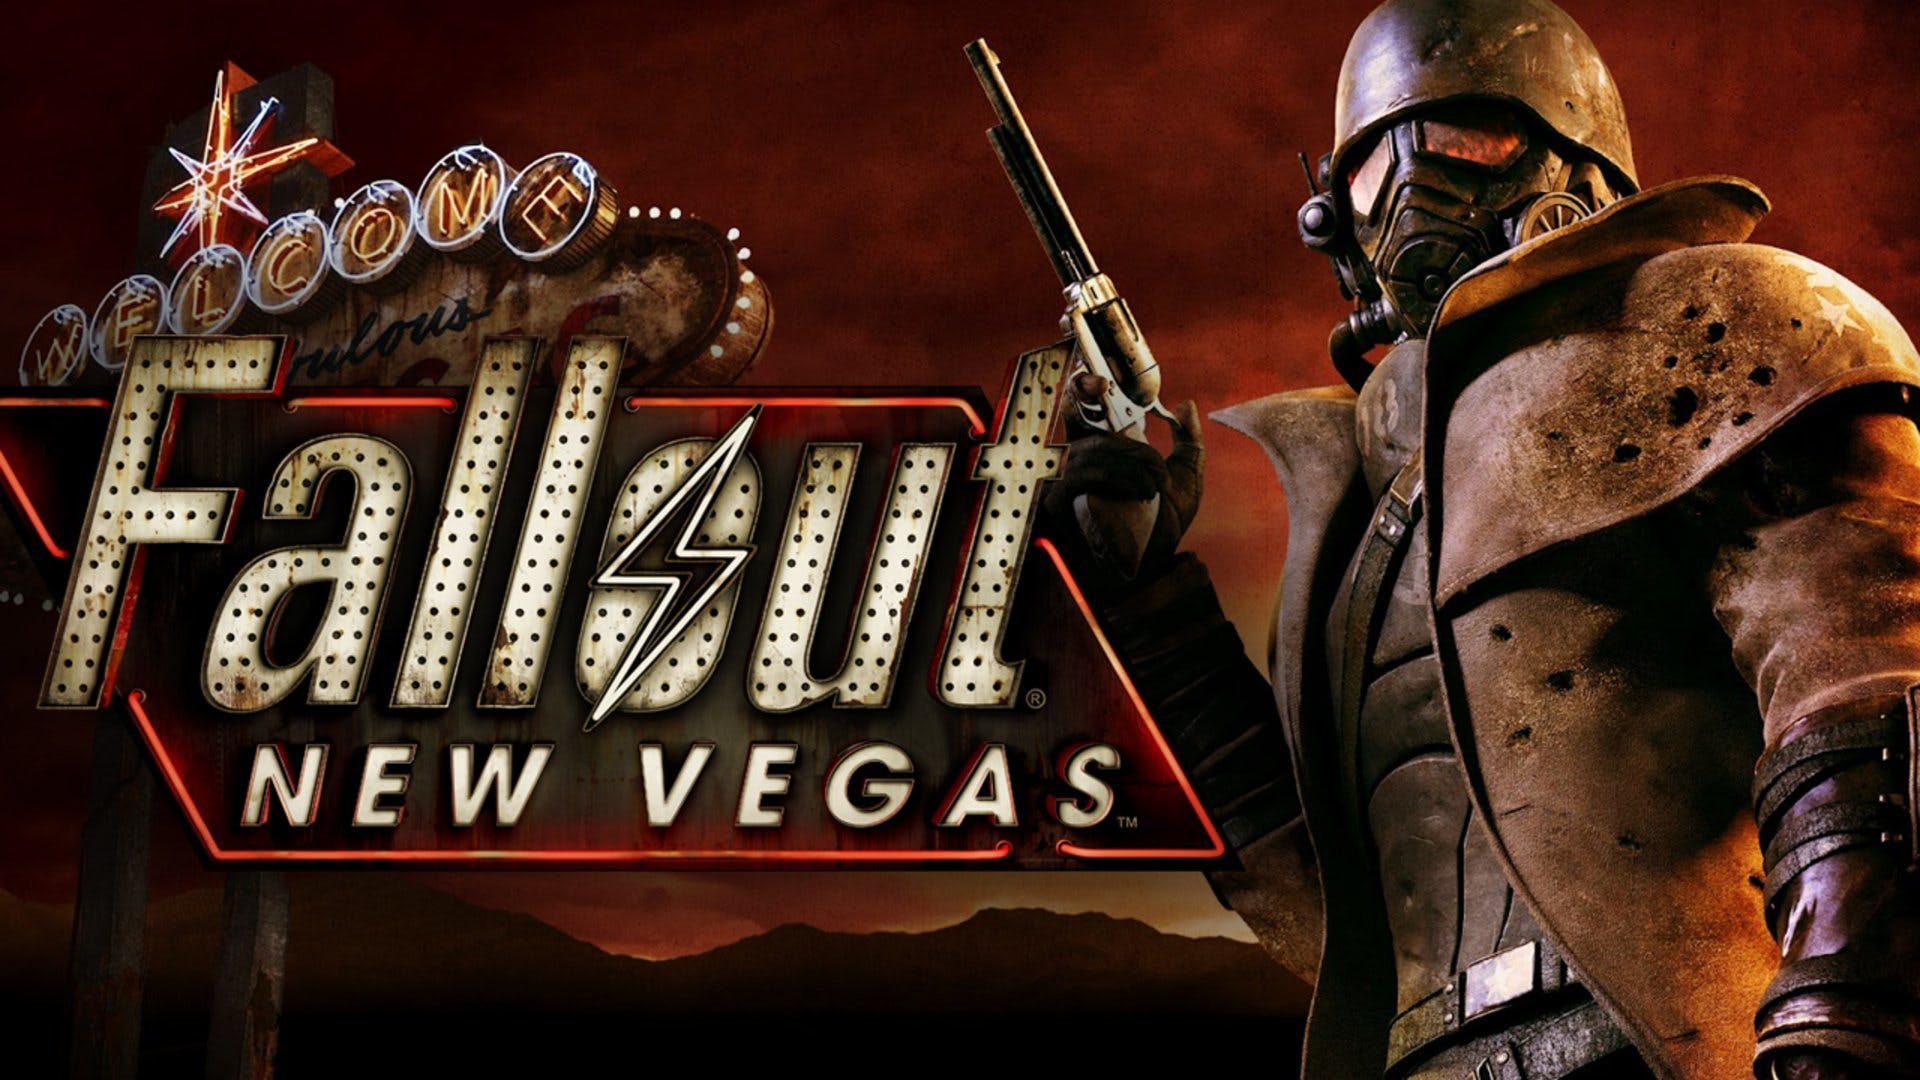 Fallout New Vegas - Ultimate Edition (2012) - День 9 (Slow Run)  - Part 4